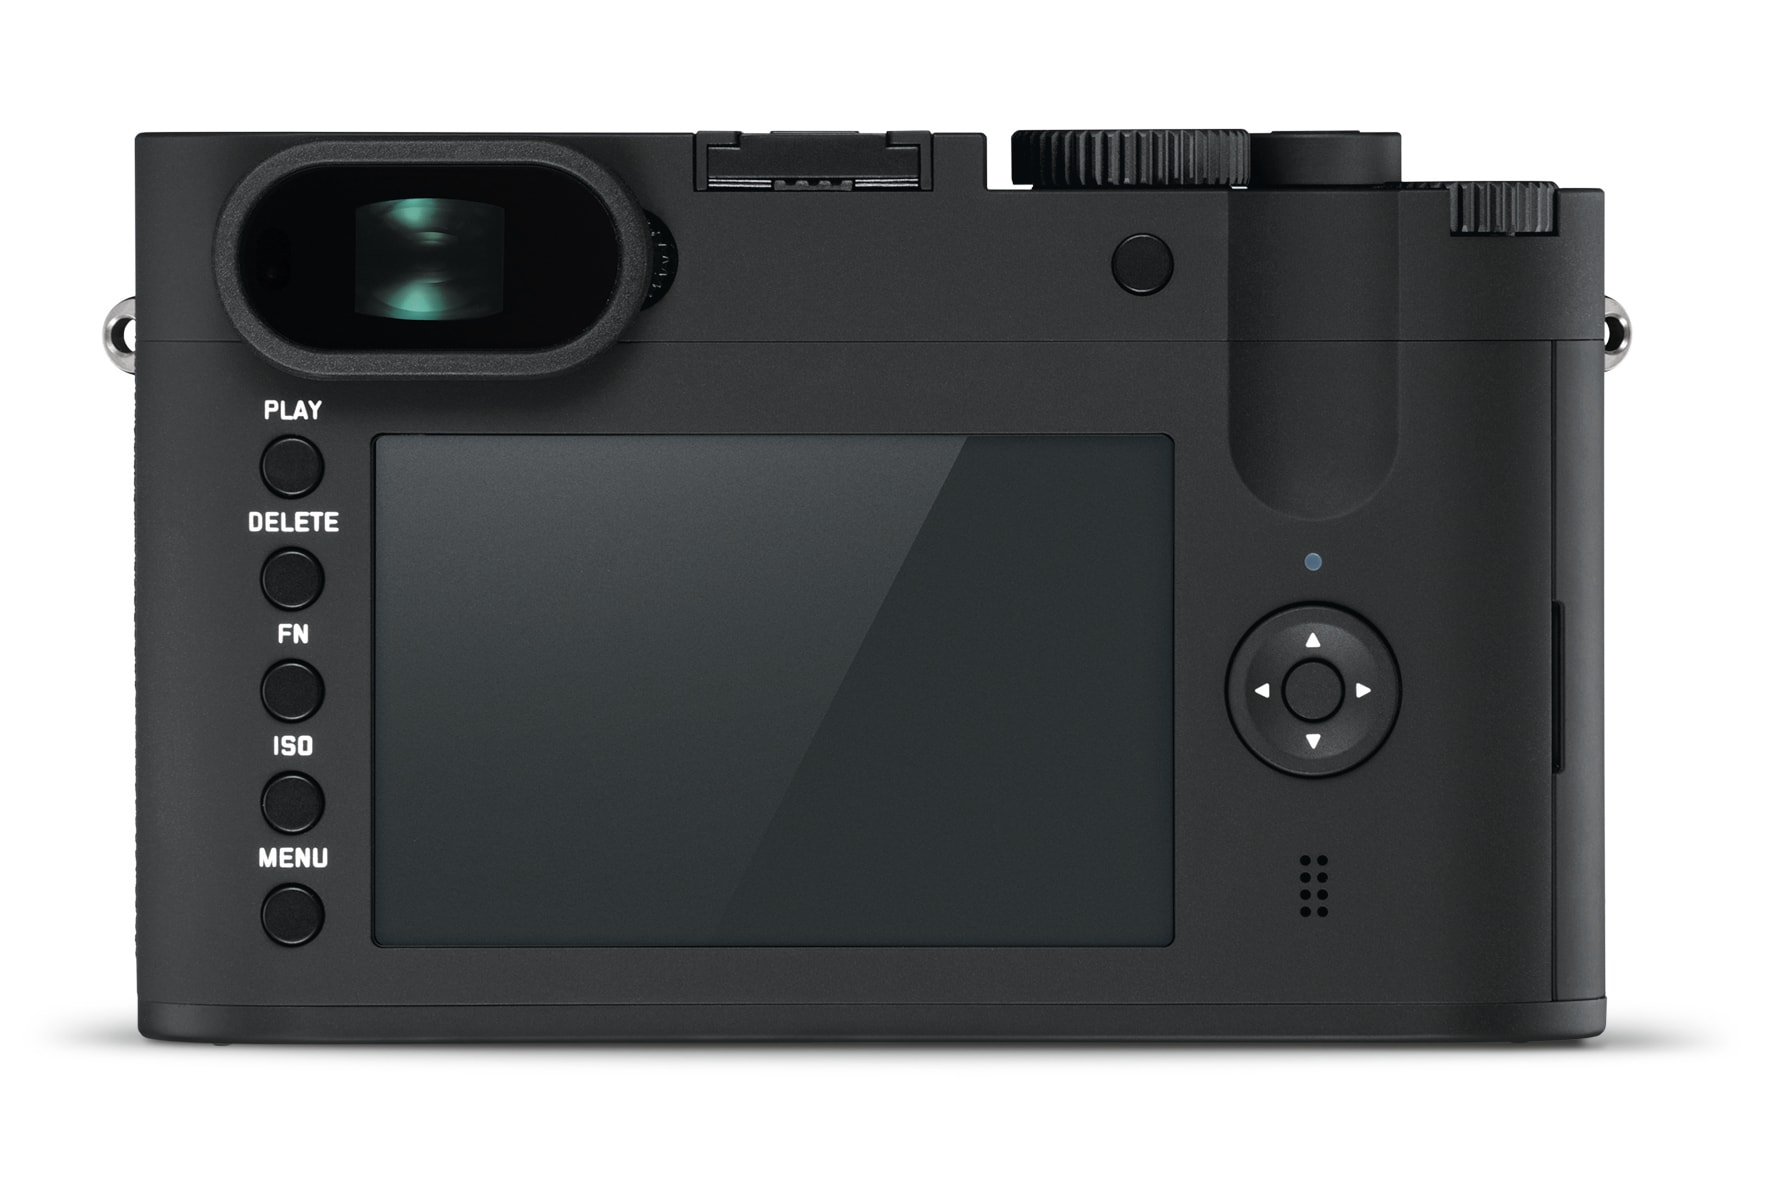 Leica 發佈 Q 系列新機型相機 Leica Q-P 